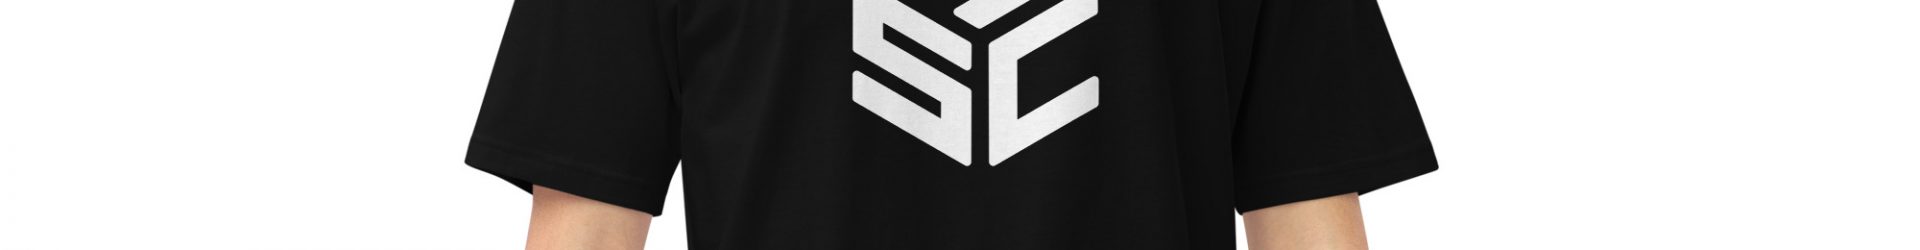 Men’s premium heavyweight tee – ASC logo front & text on back